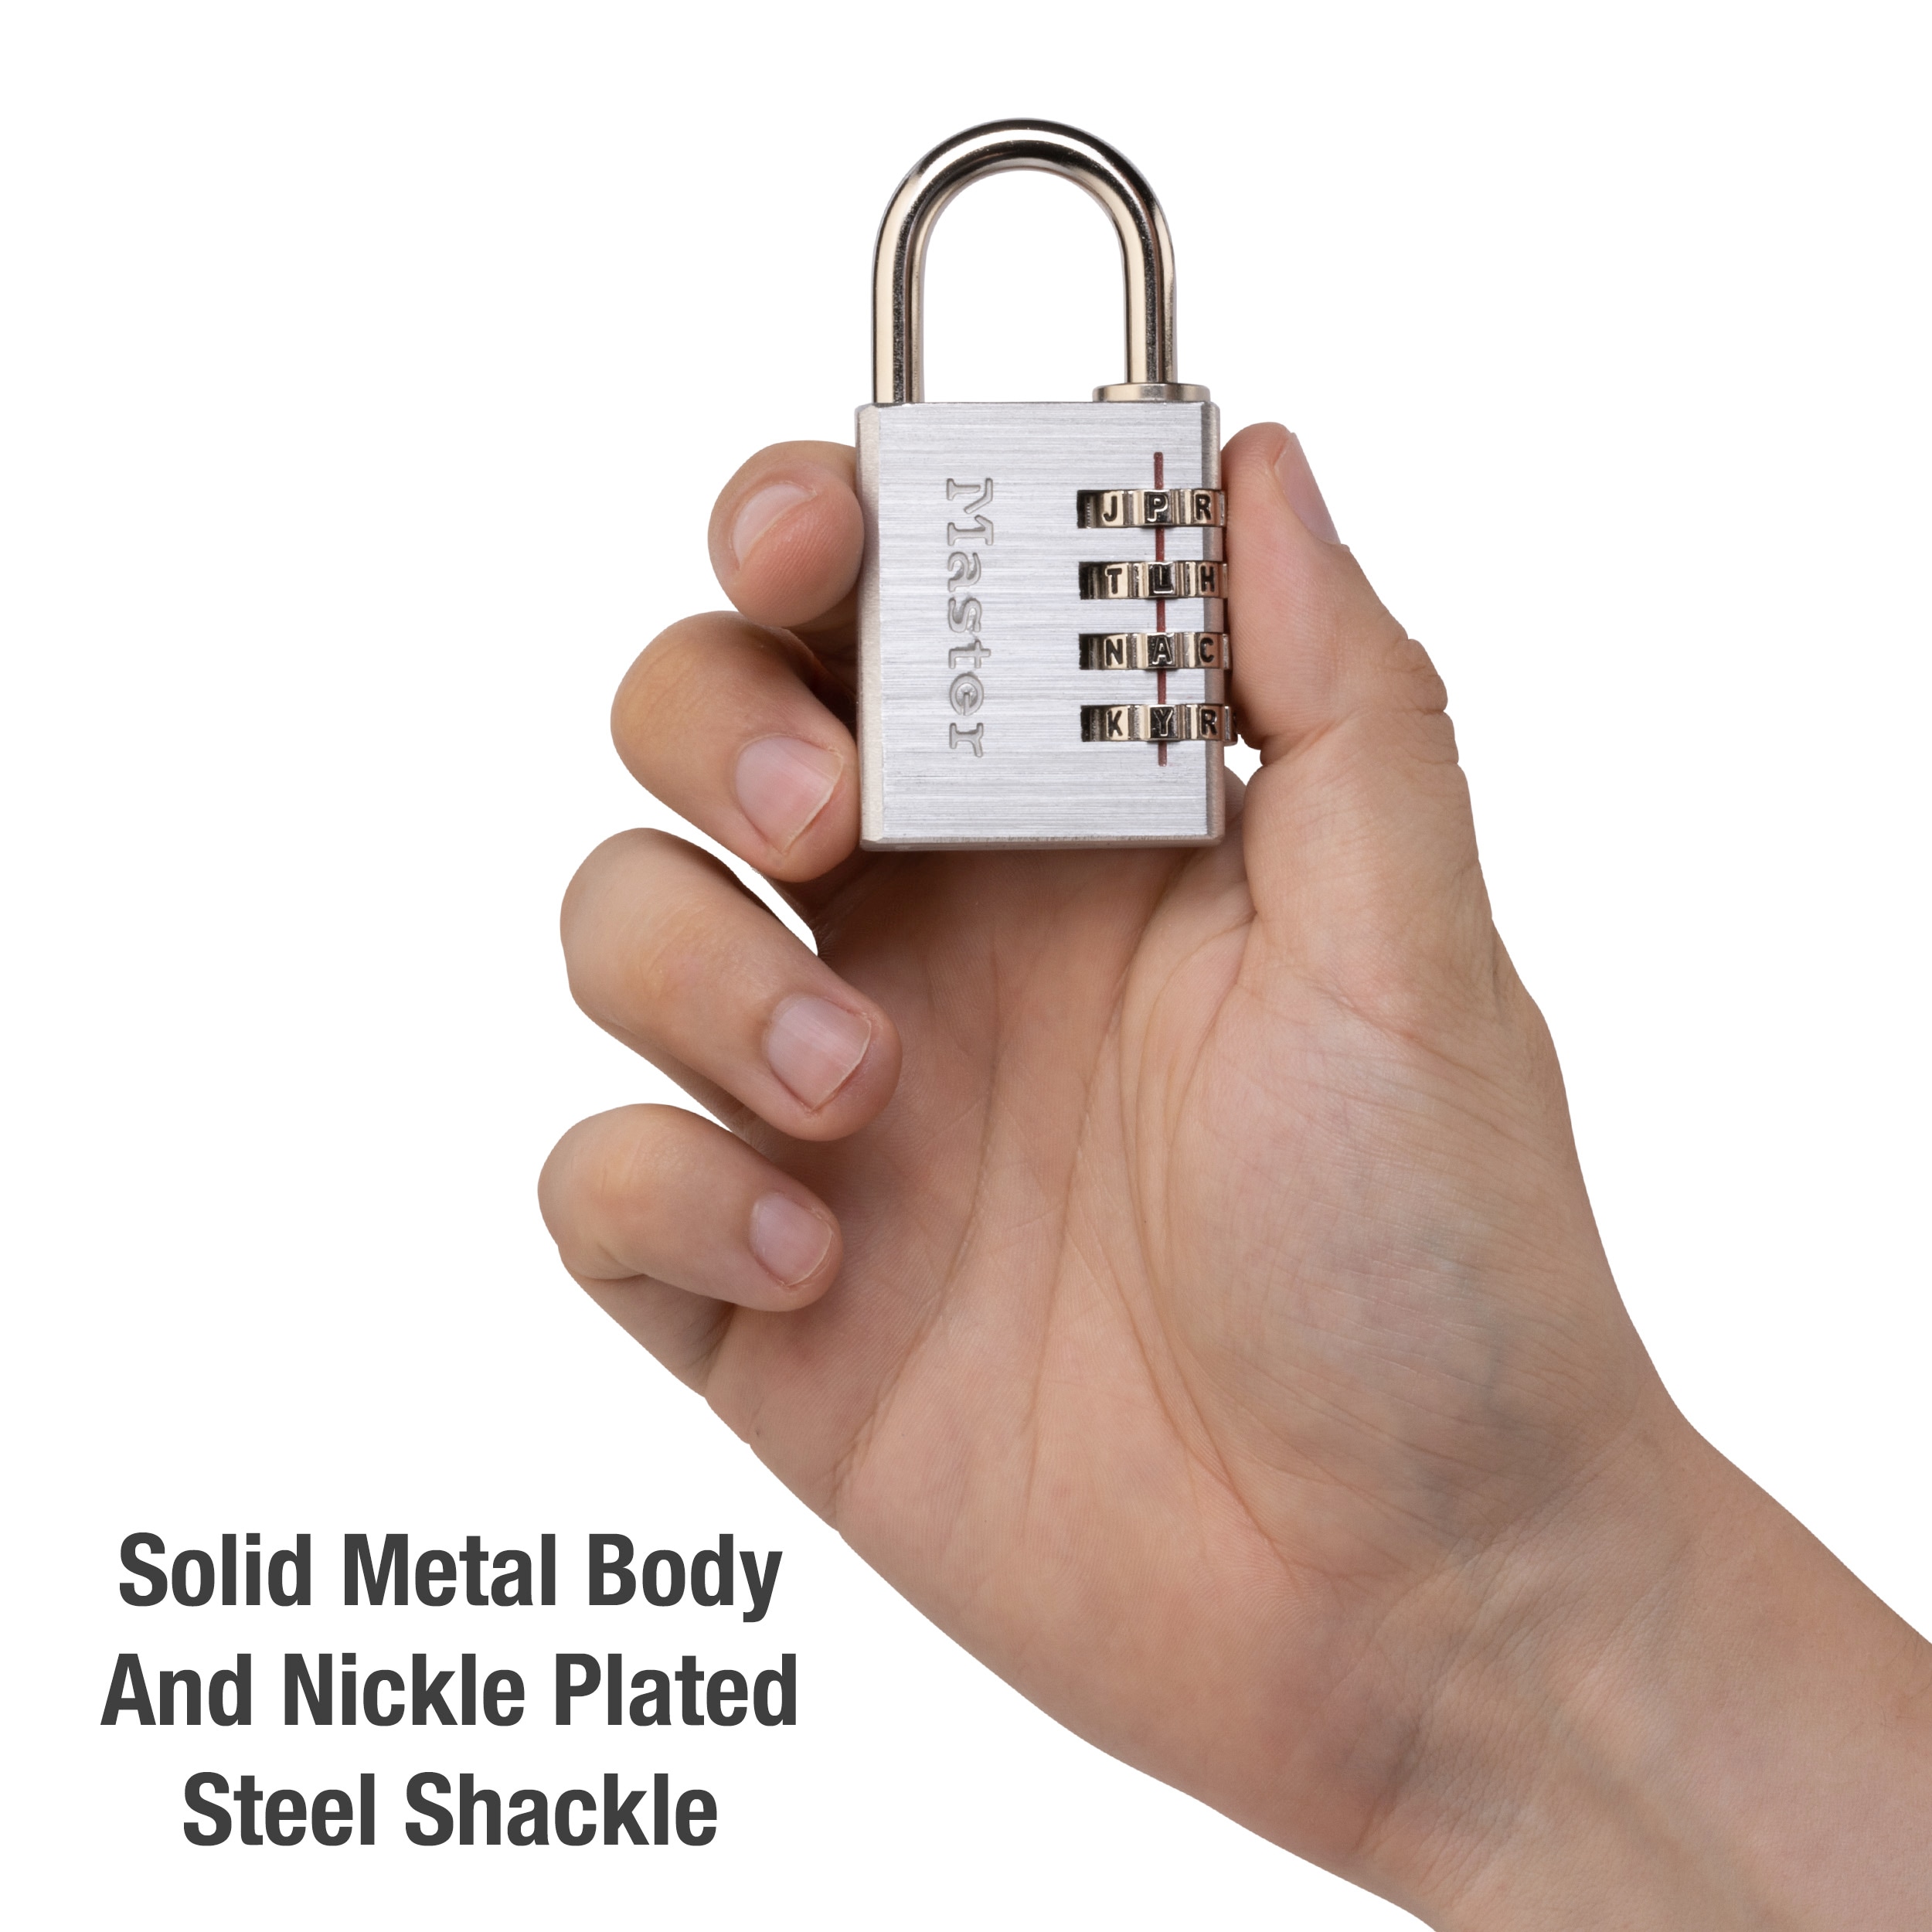 Master Lock Combination Stainless Steel Padlock w/Key Cylinder 1 7